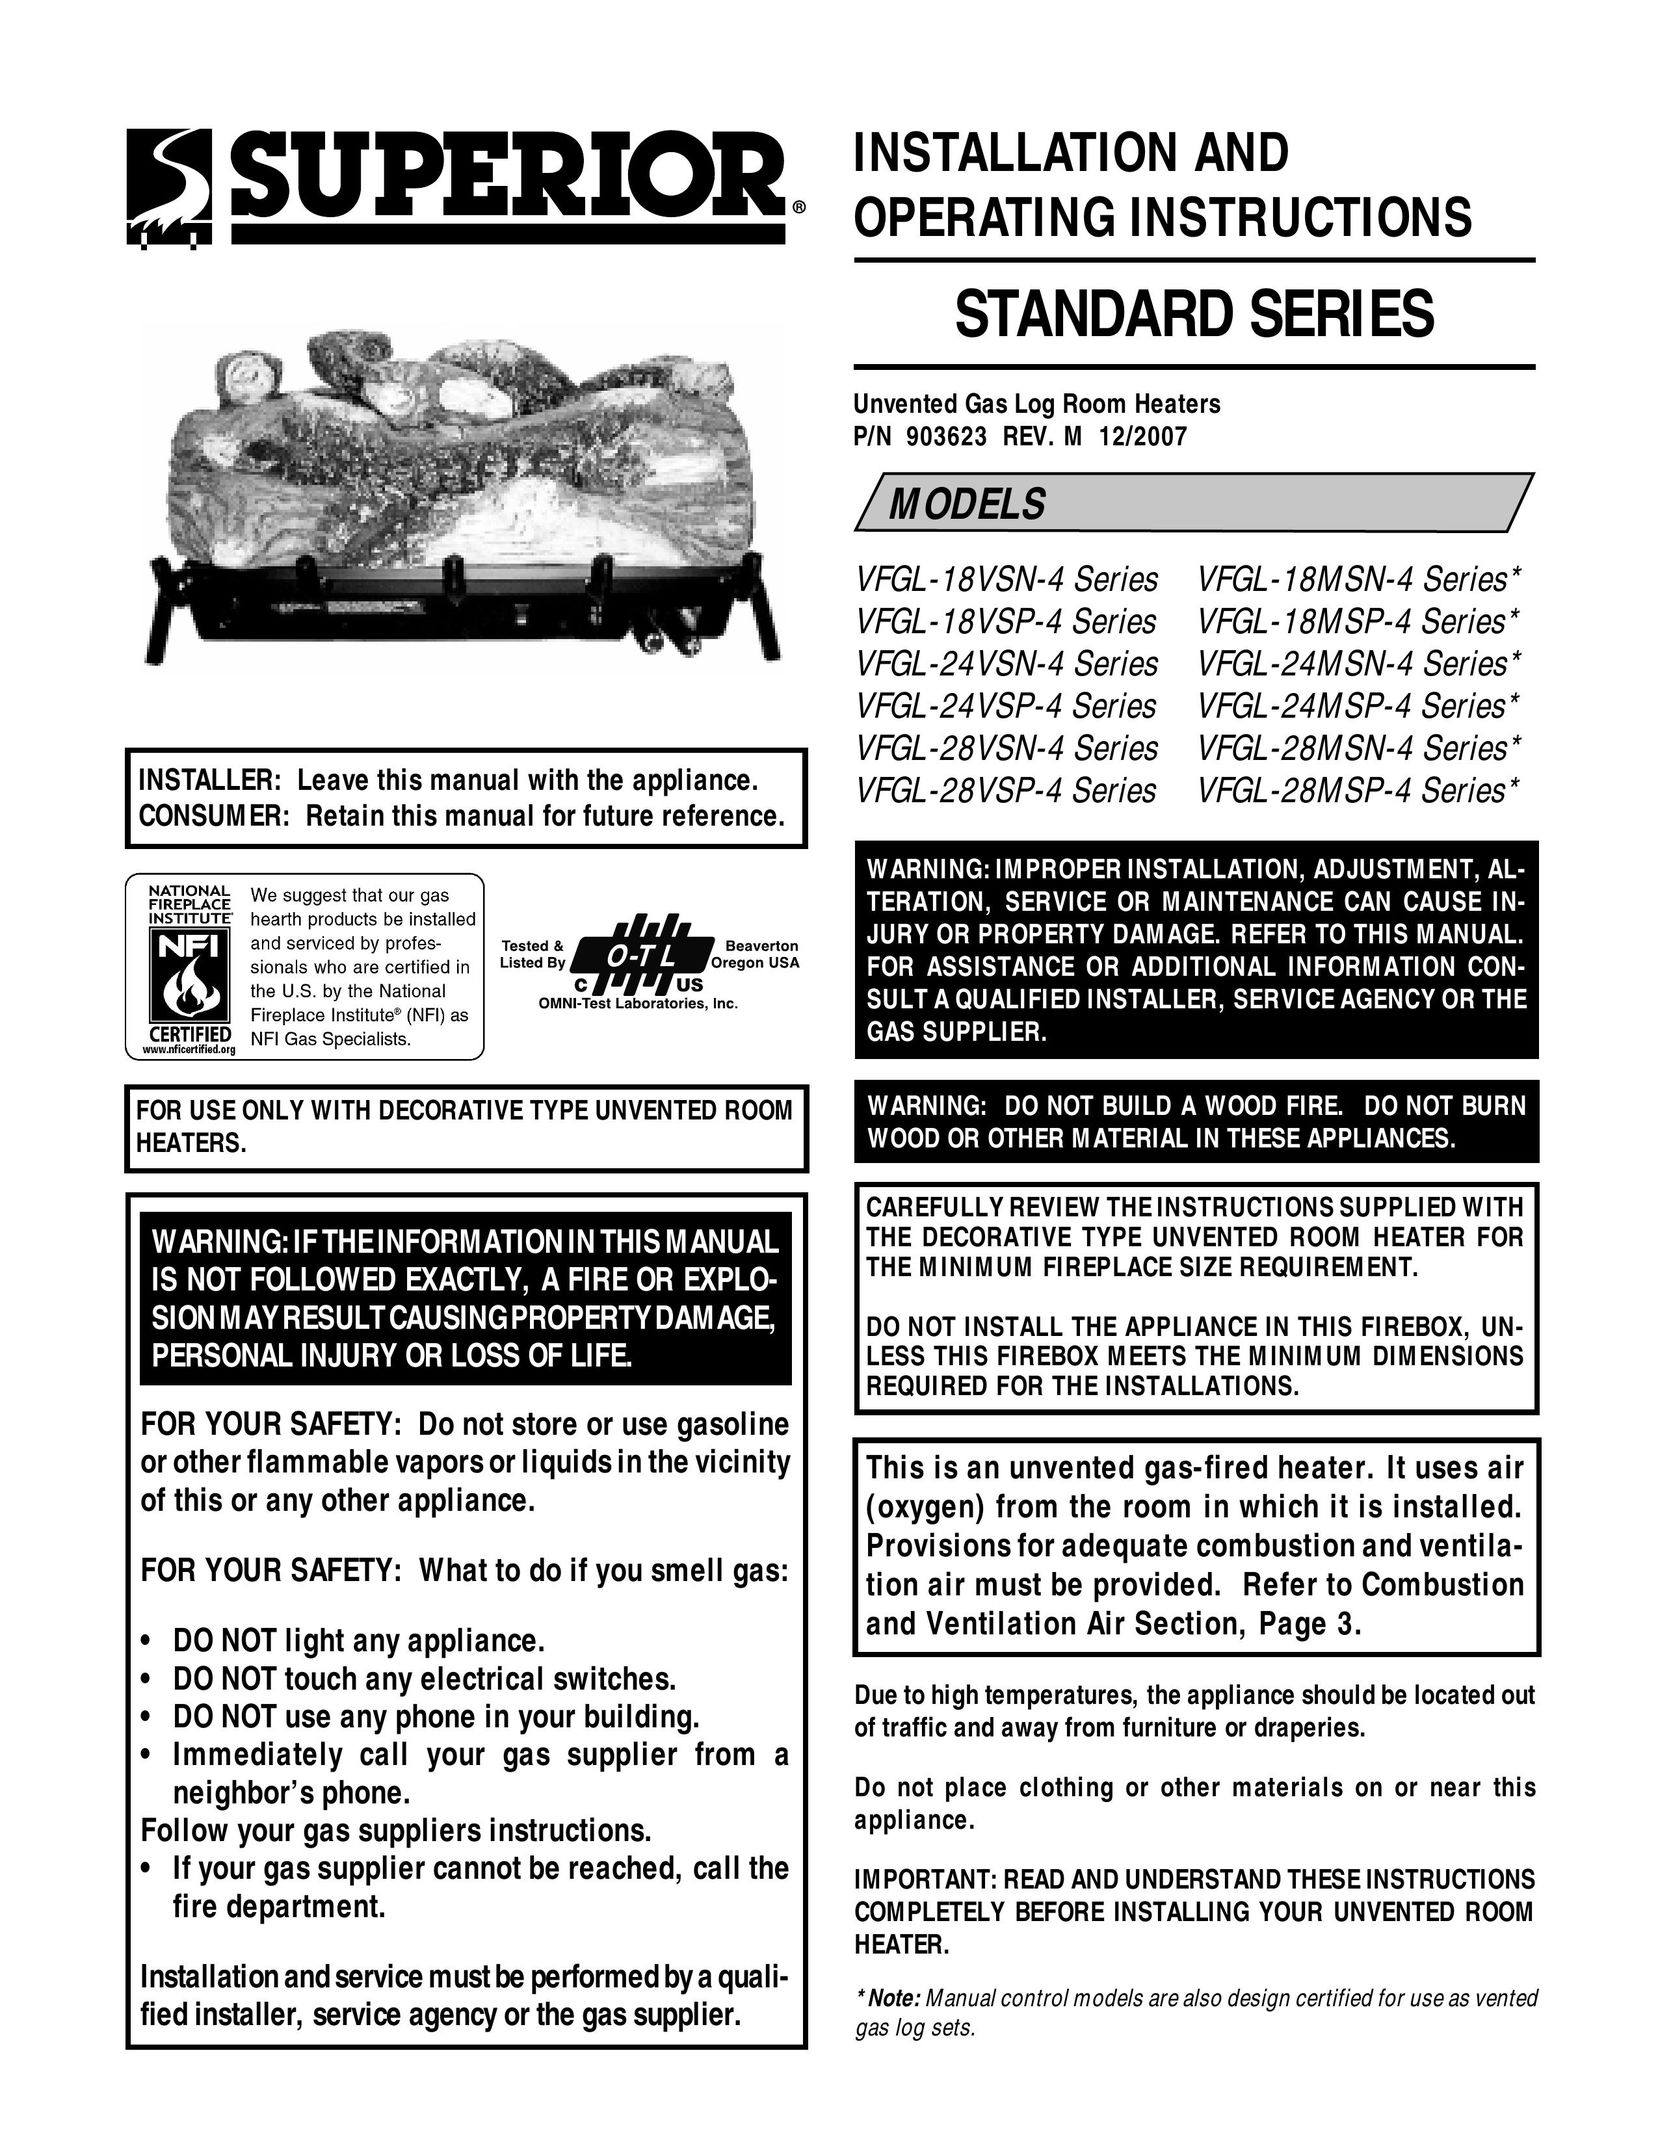 Superior VFGL-28MSP-4 SERIES* Gas Heater User Manual